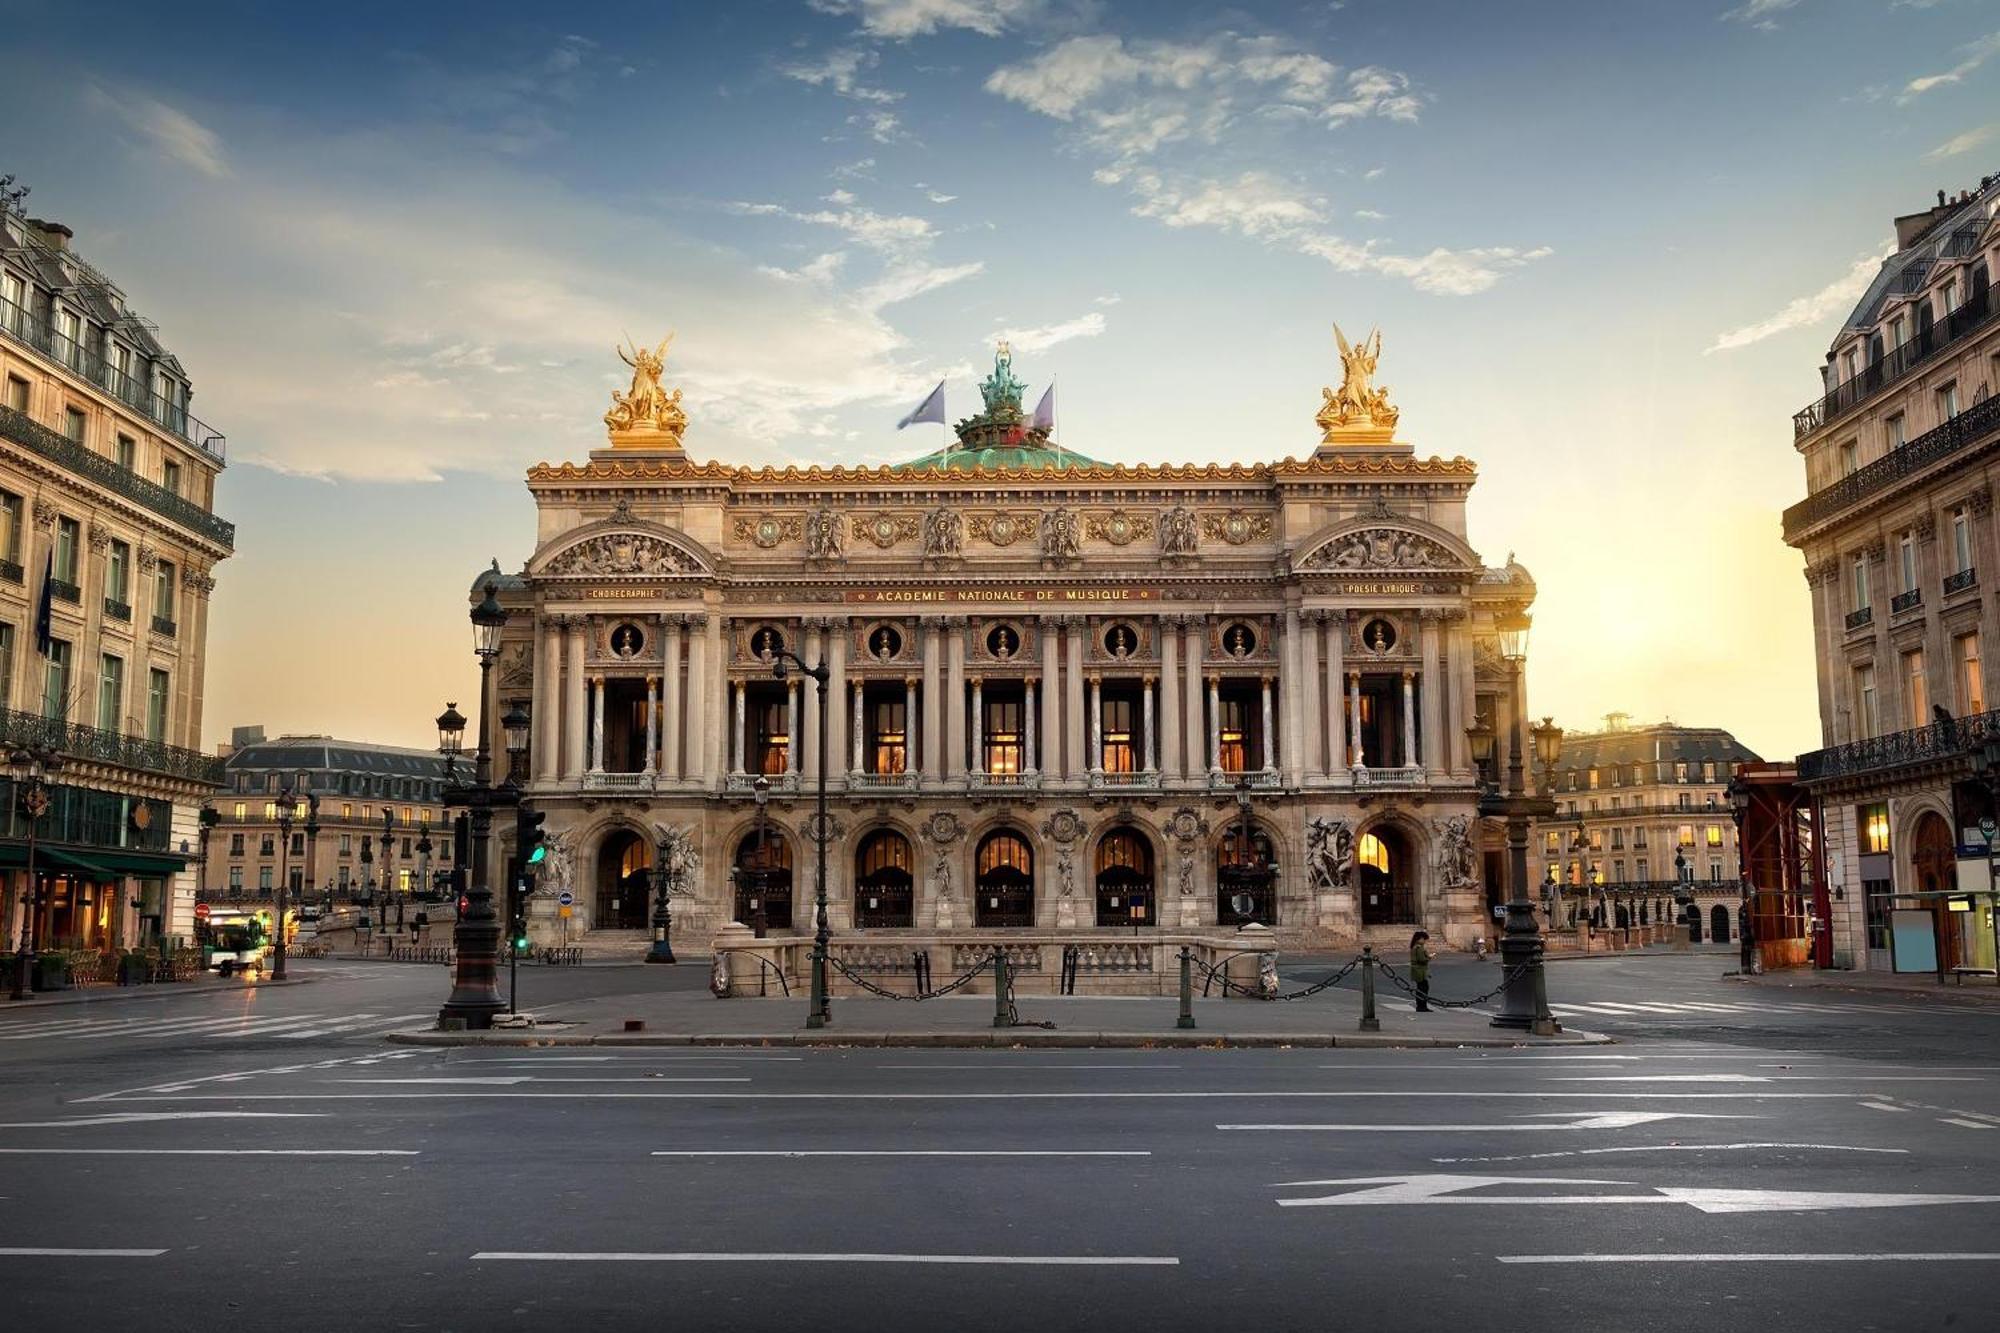 Hotel Etats Unis Opera Paris Eksteriør billede